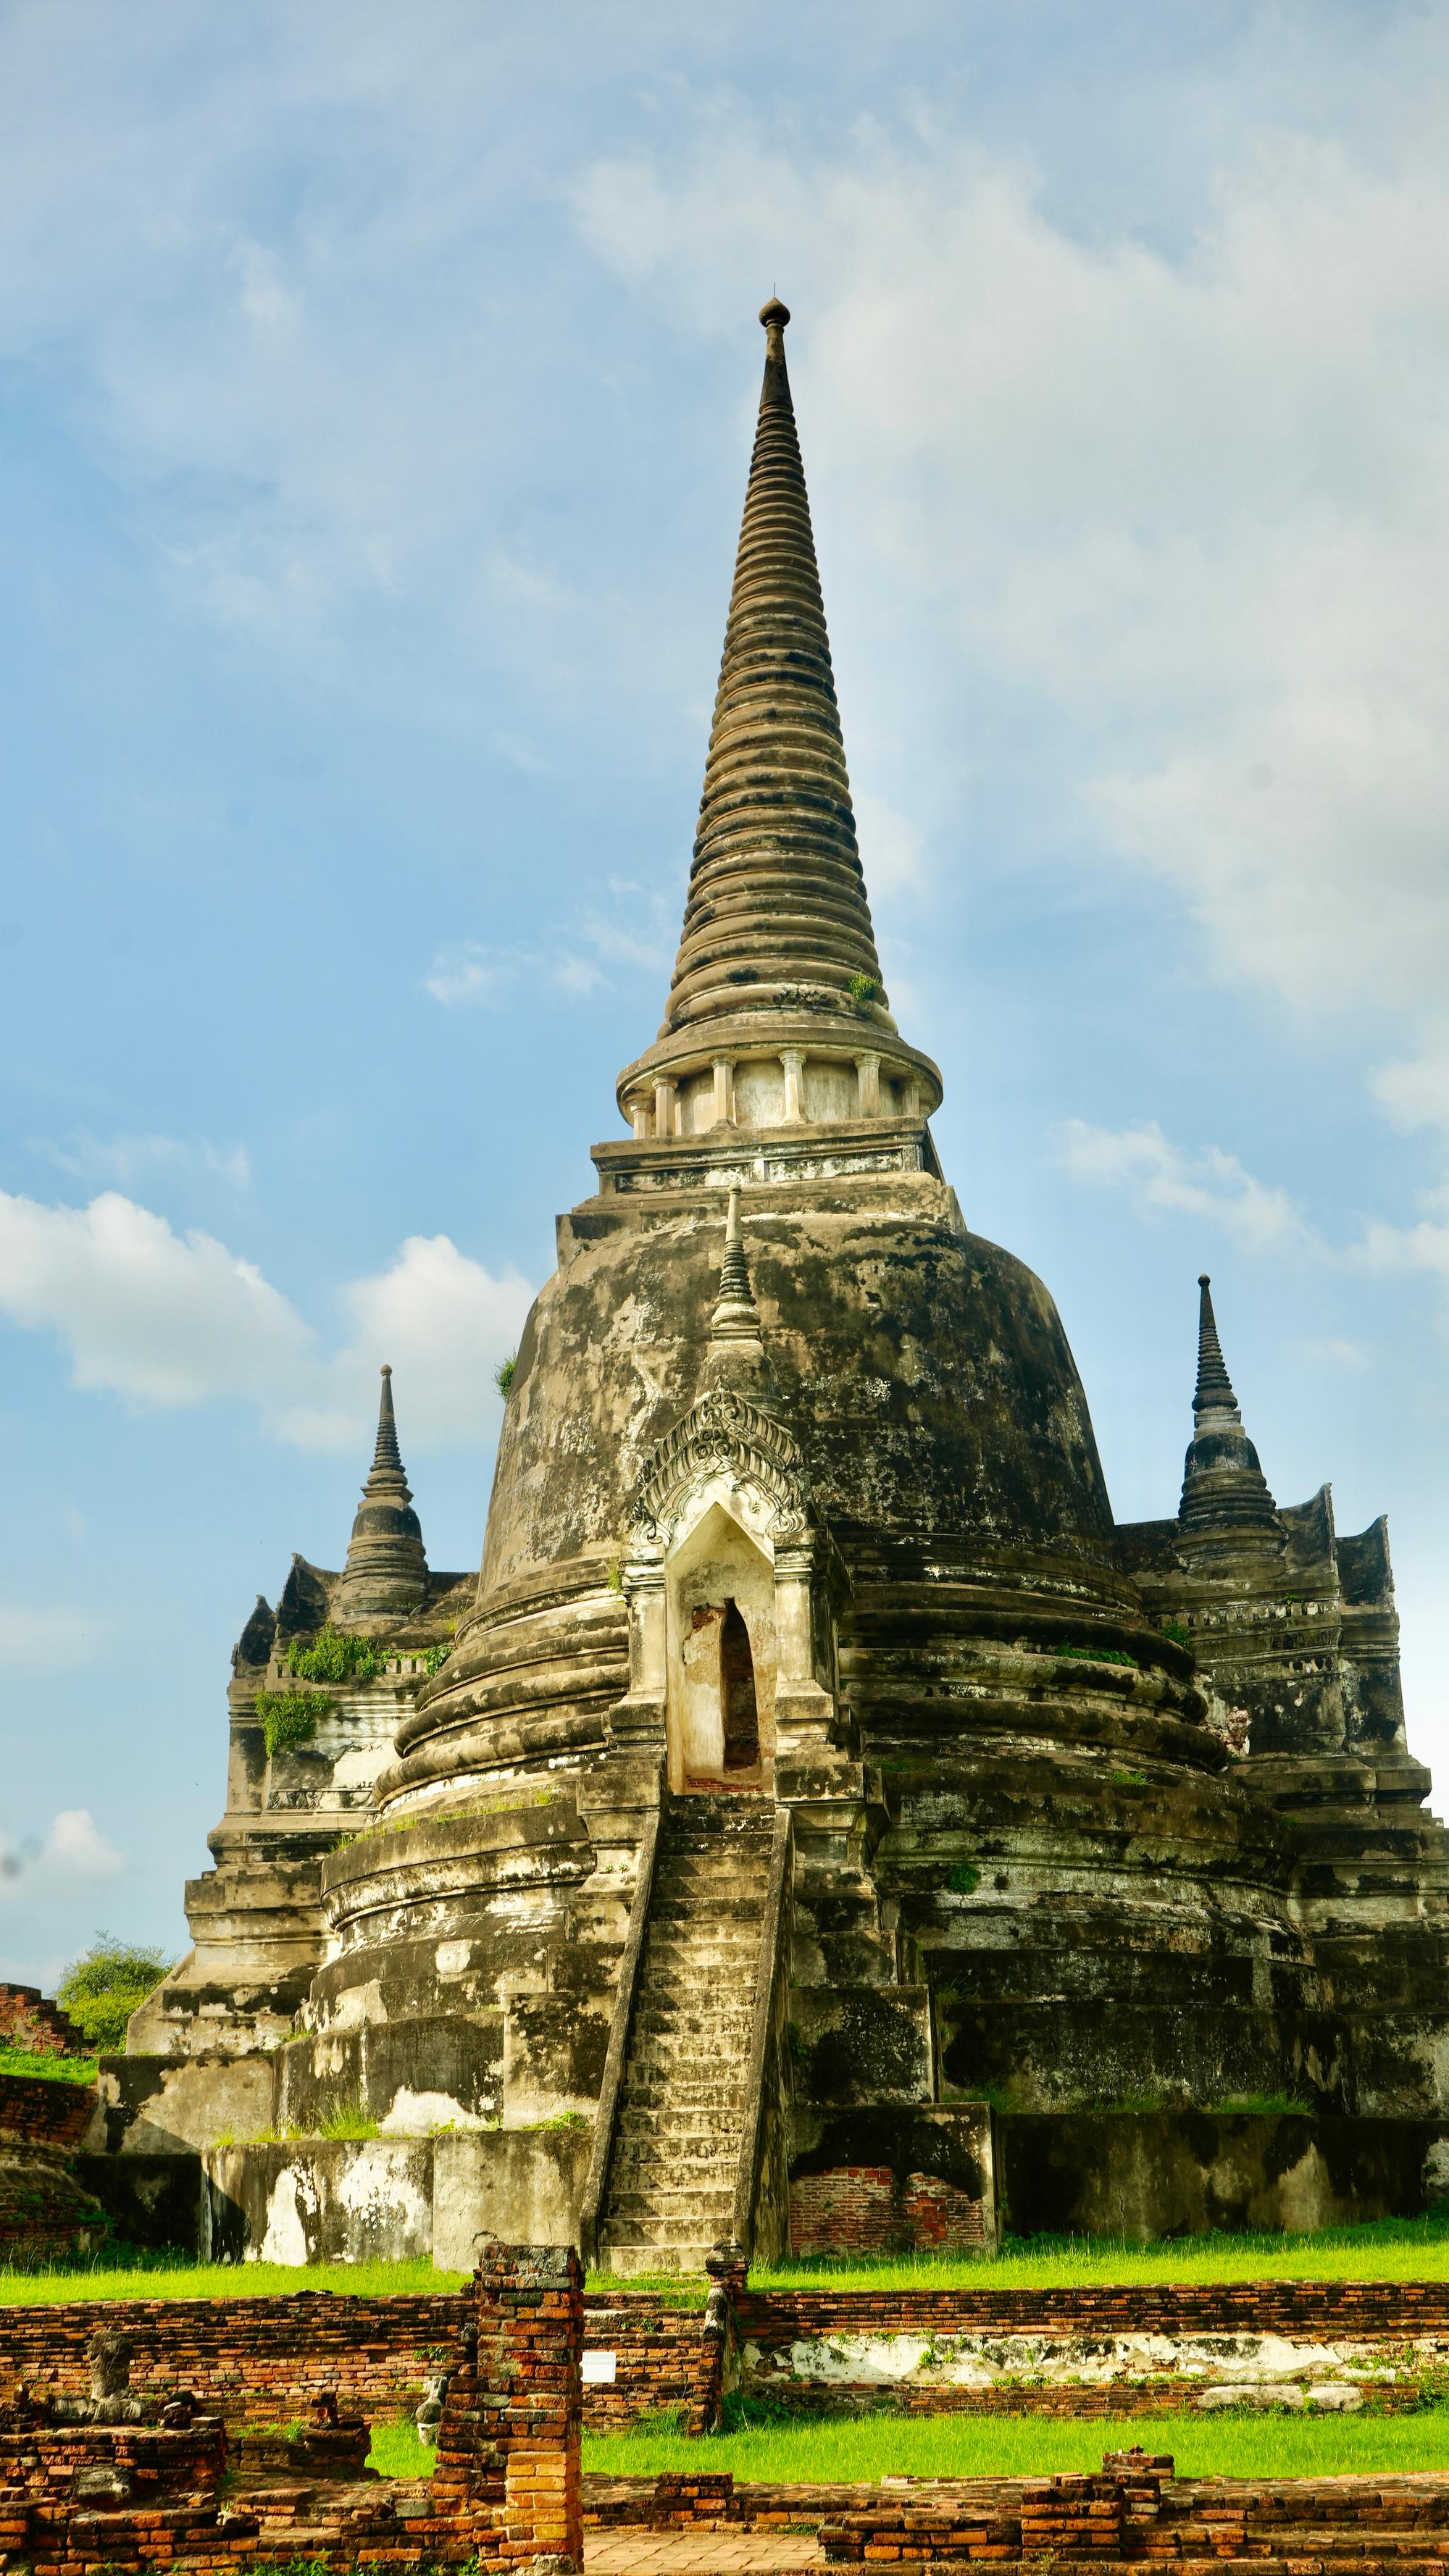 14th century Stupa